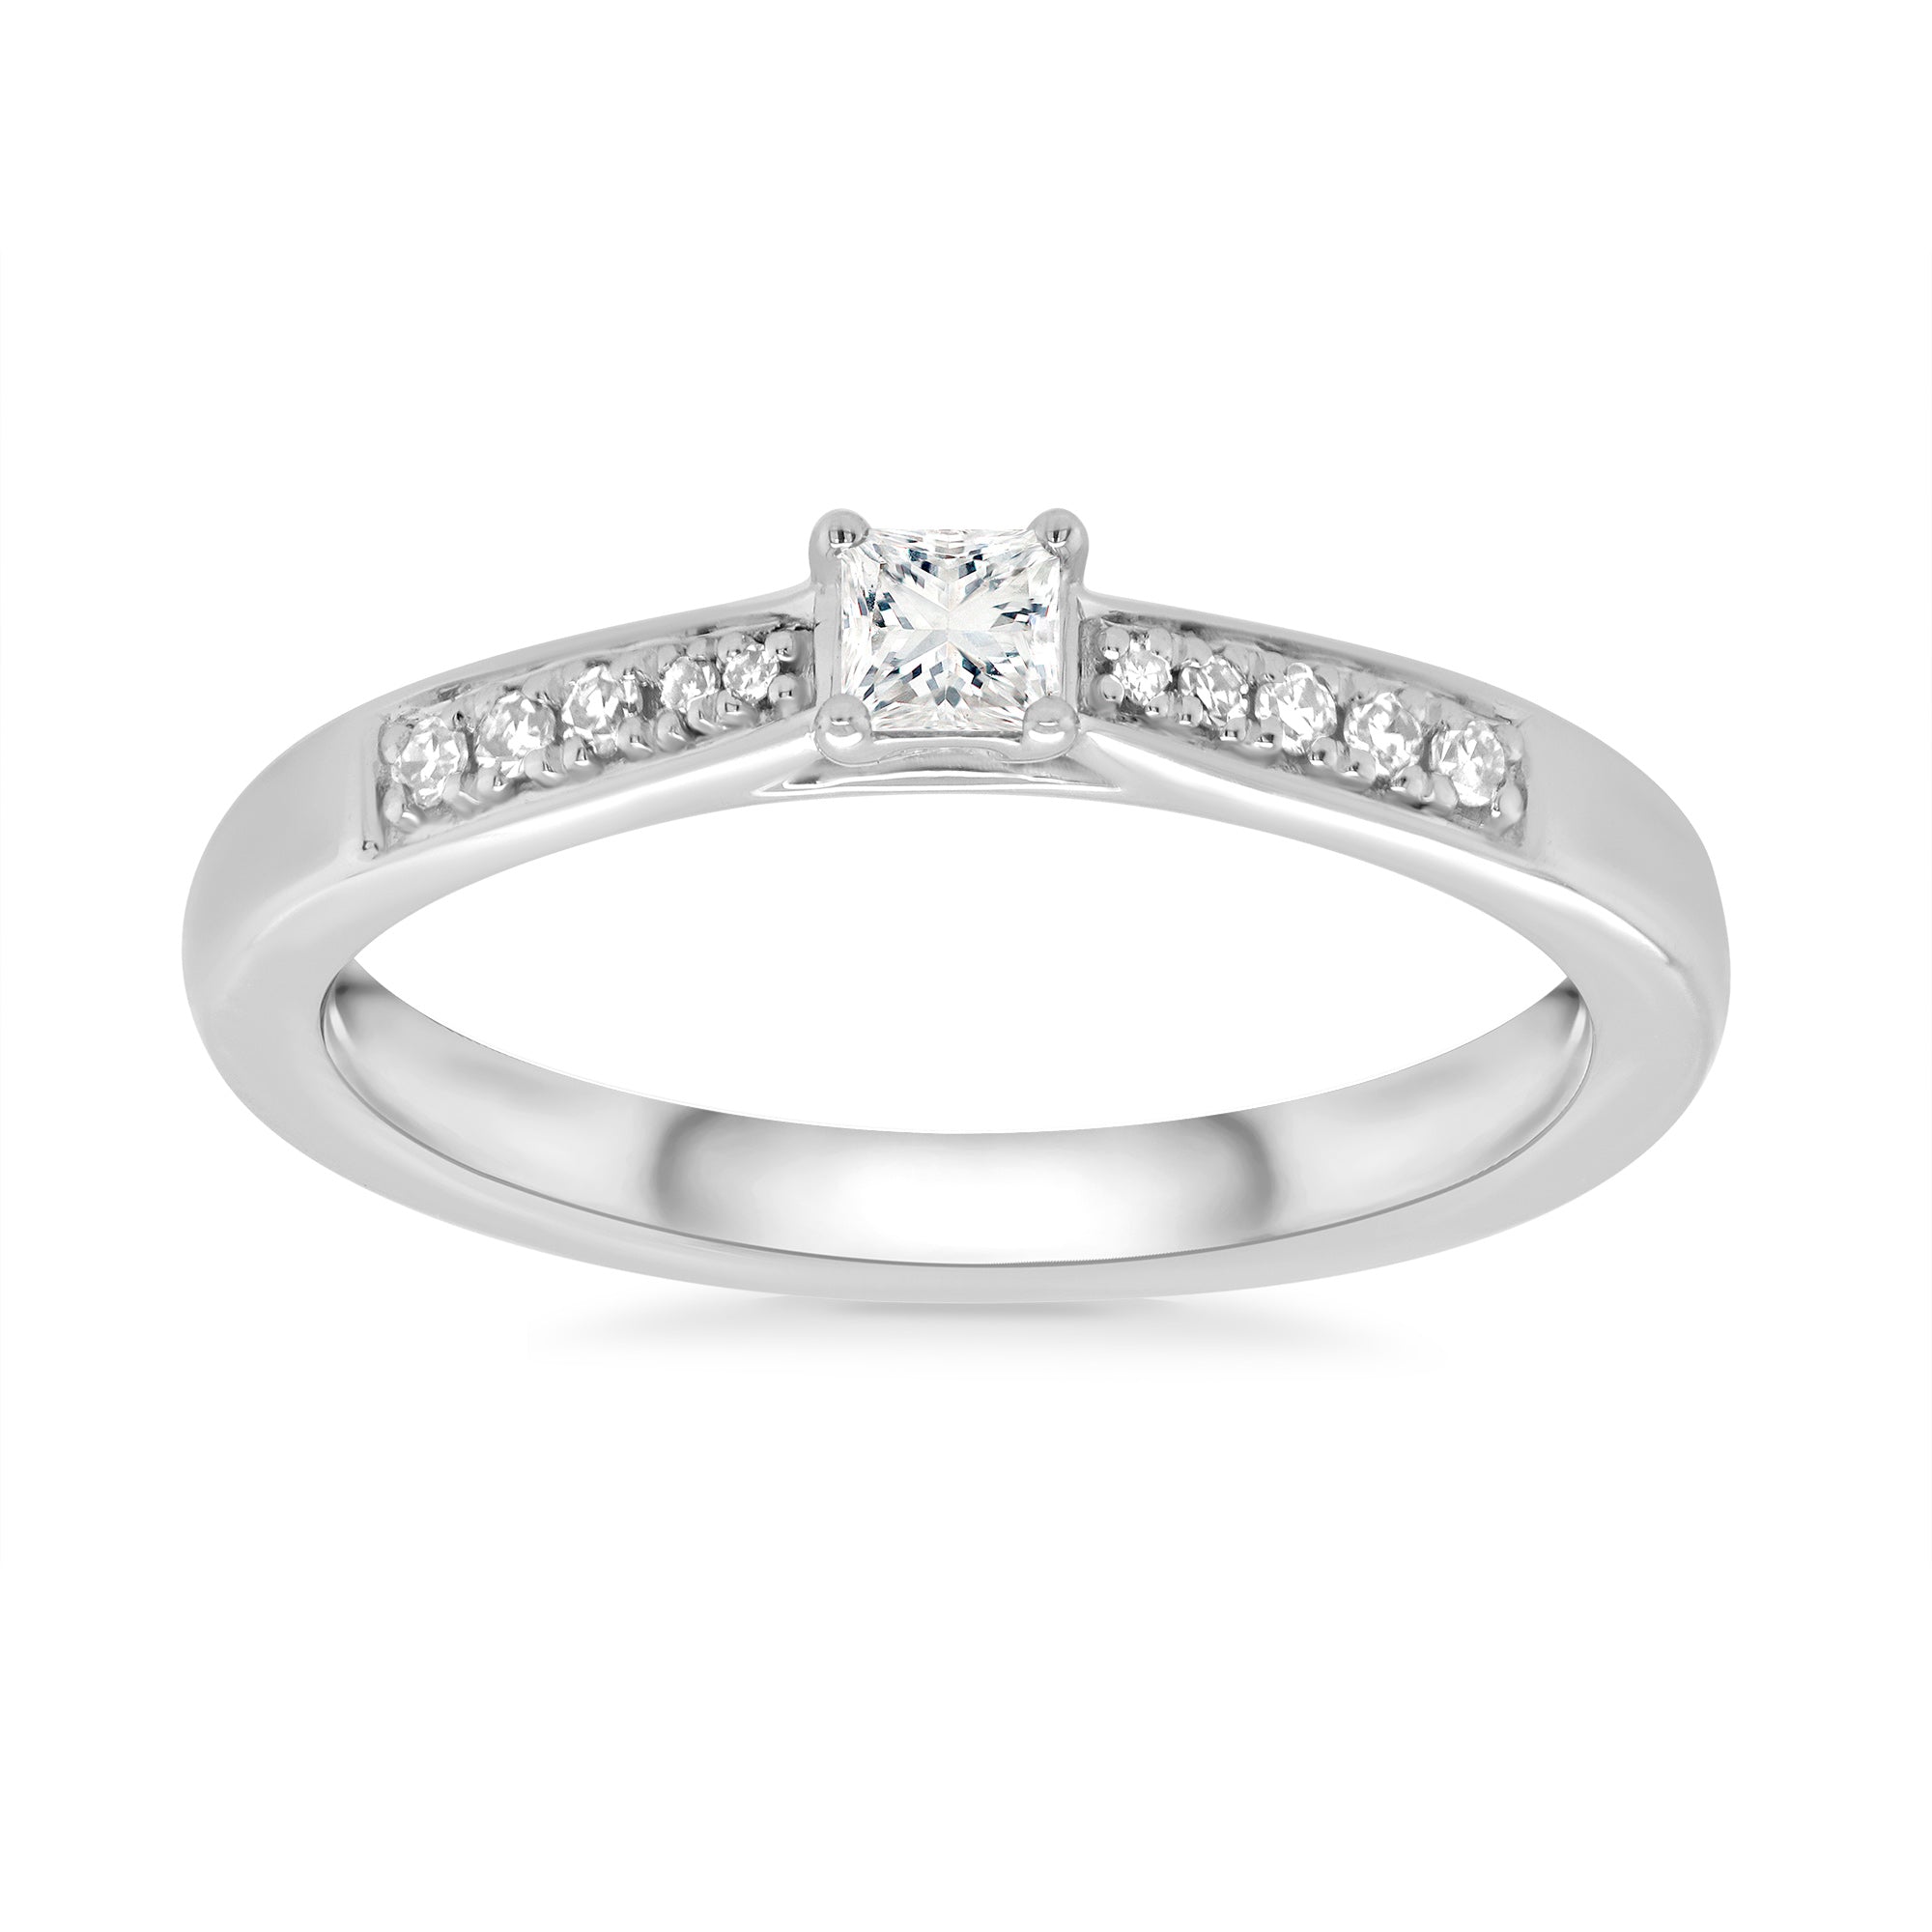 9ct white gold princess cut single stone diamond ring with diamond set shoulders 0.21ct